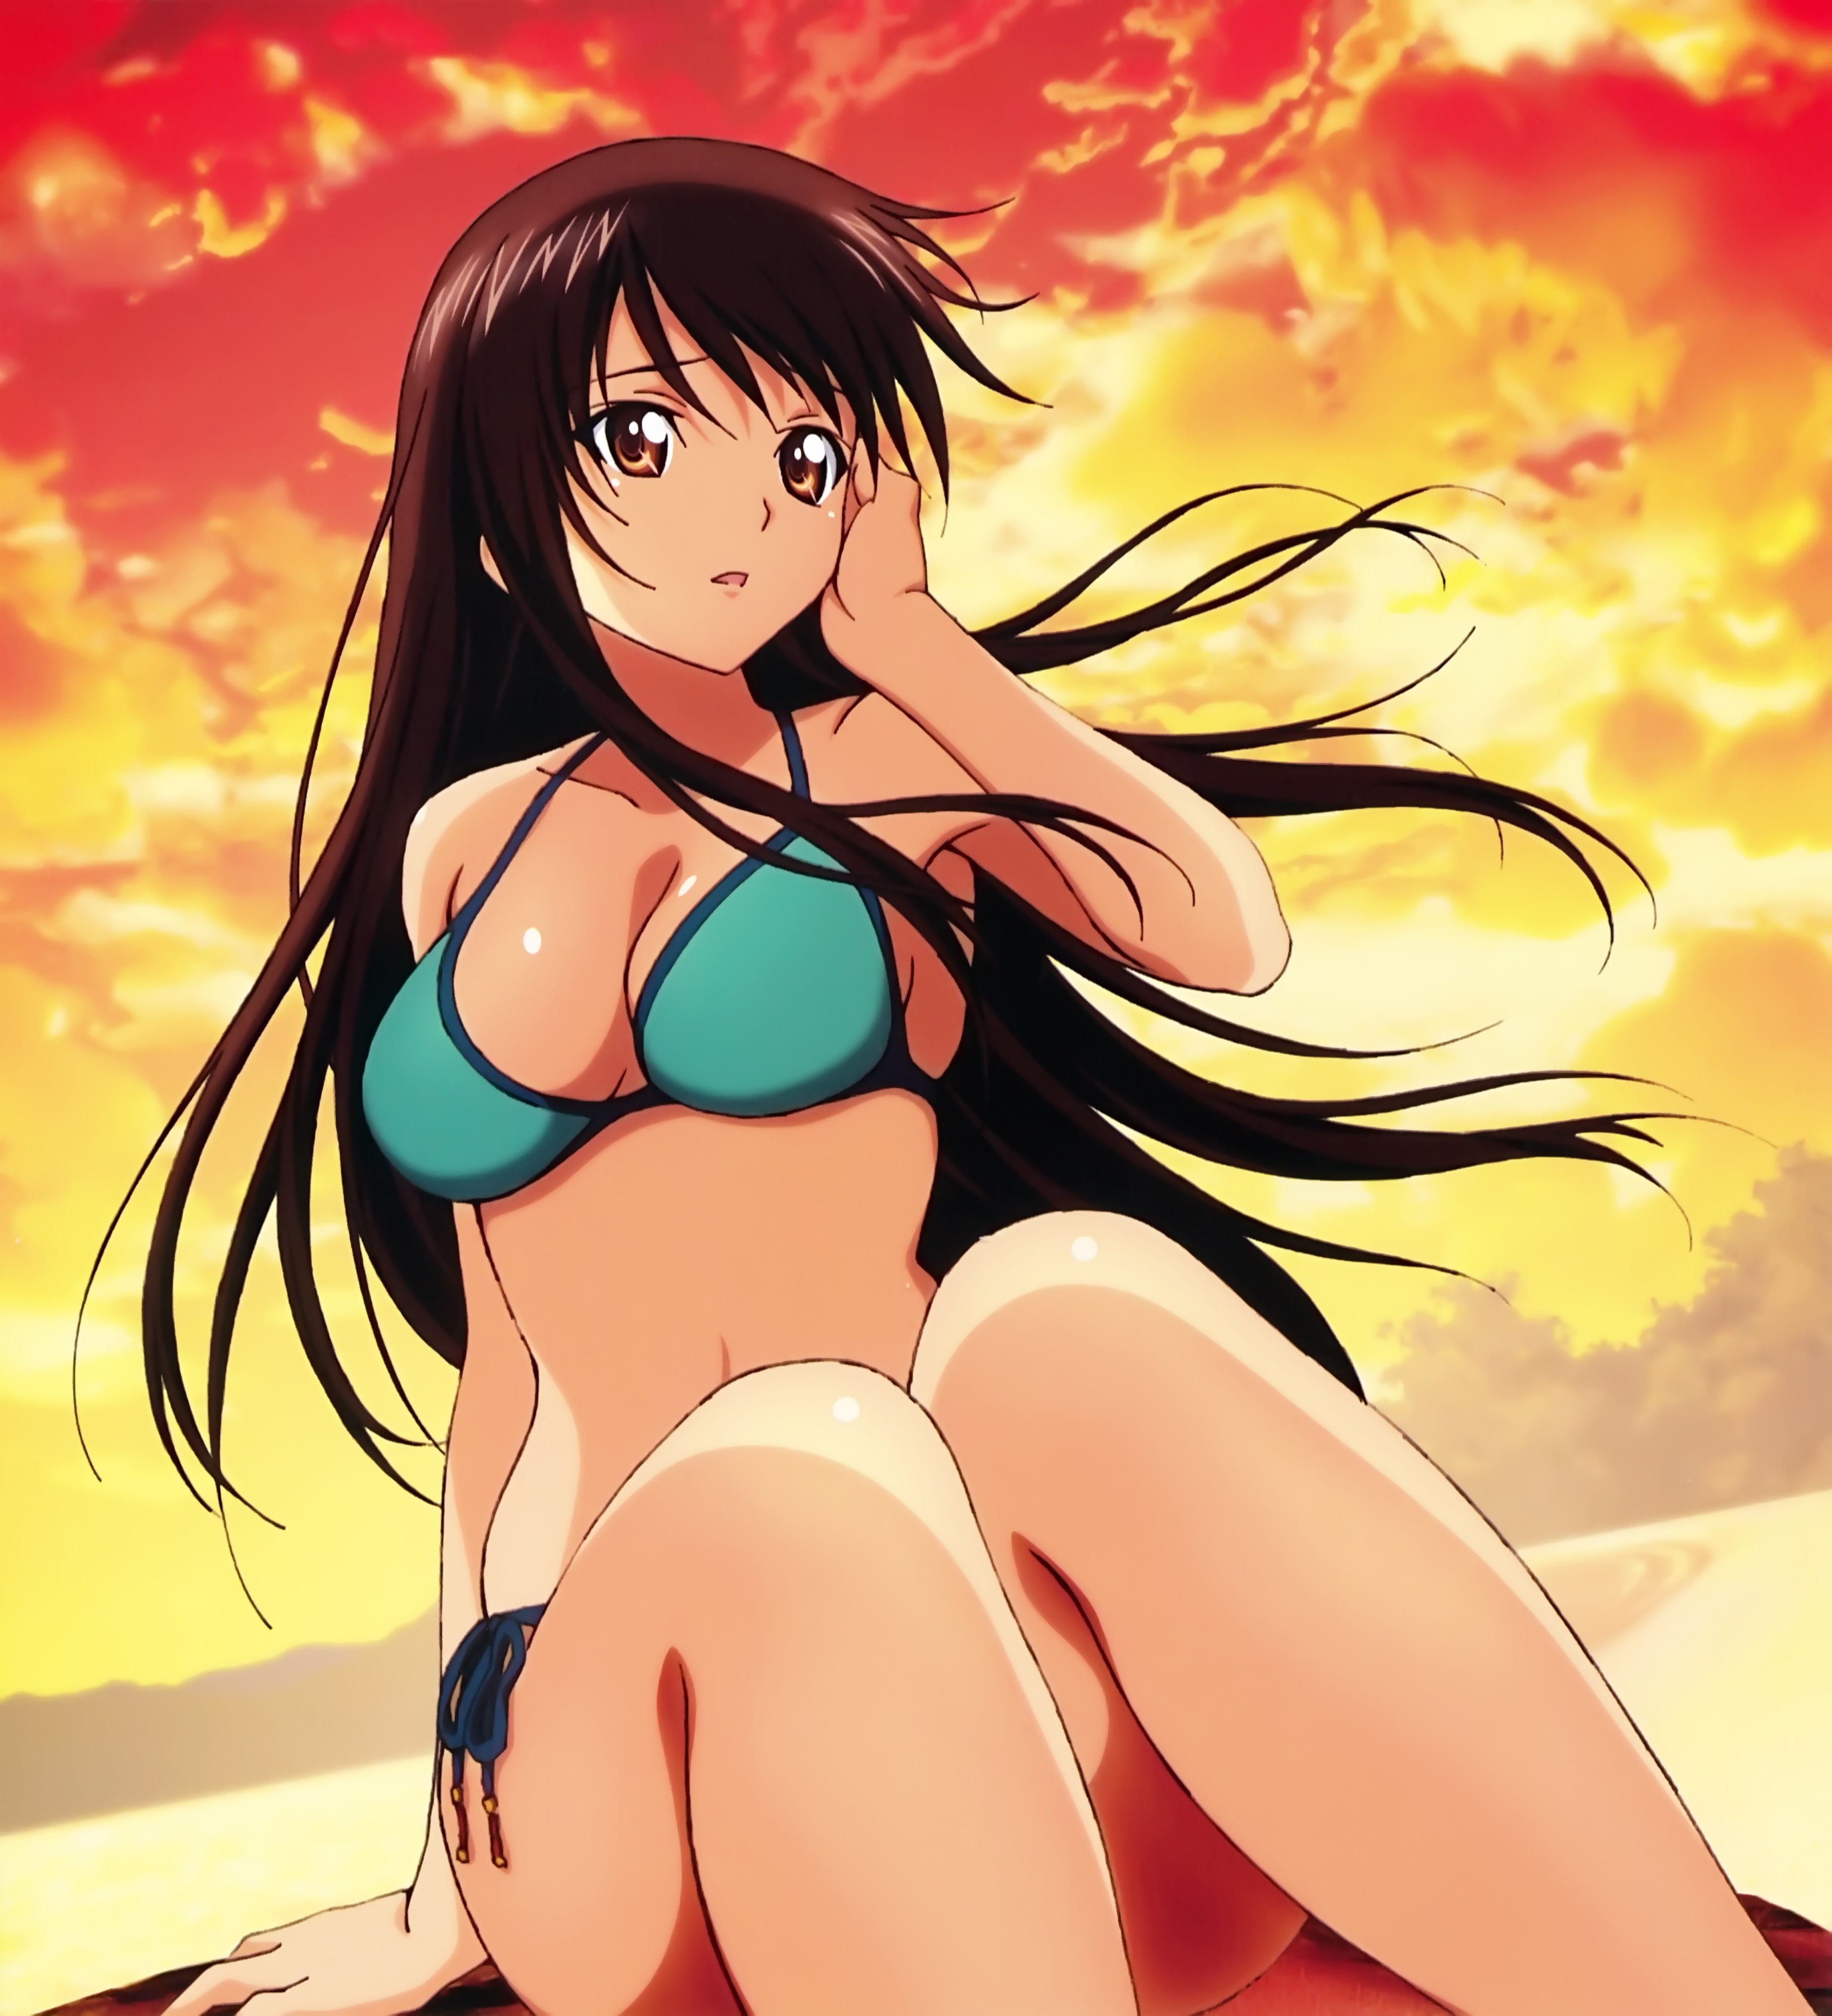 Anime 3640x4005 anime anime girls long hair Kotegawa Yui bikini cleavage To Love-ru brunette brown eyes sunset beach Suwa Masahiro boobs knees thighs legs sky orange sky